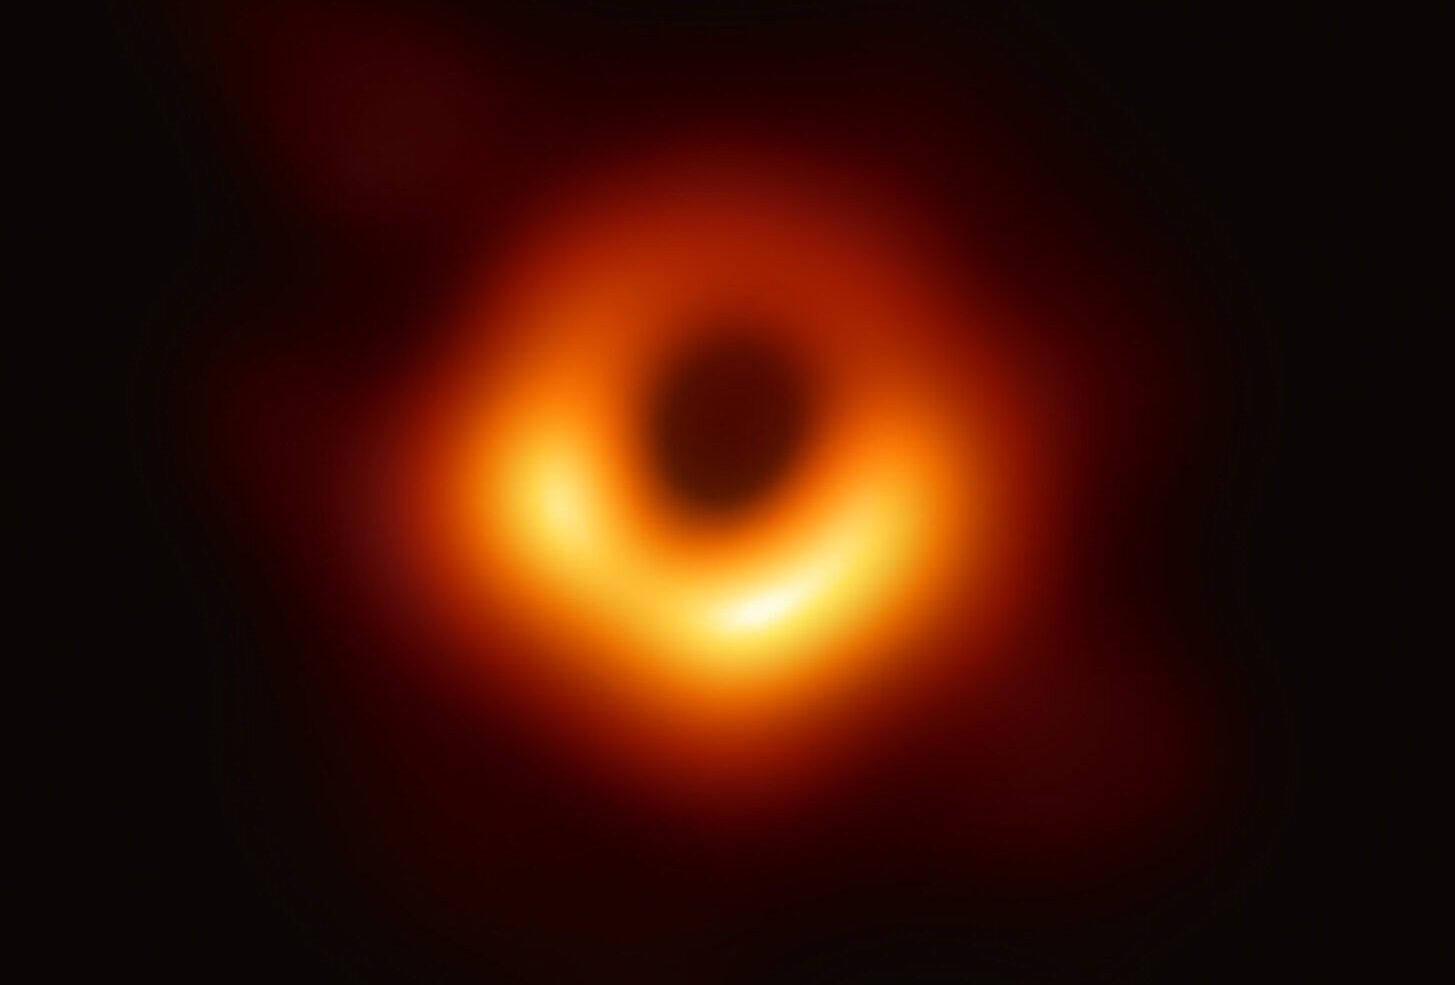 Black hole captured by the Event Horizon Telescope (EHT)